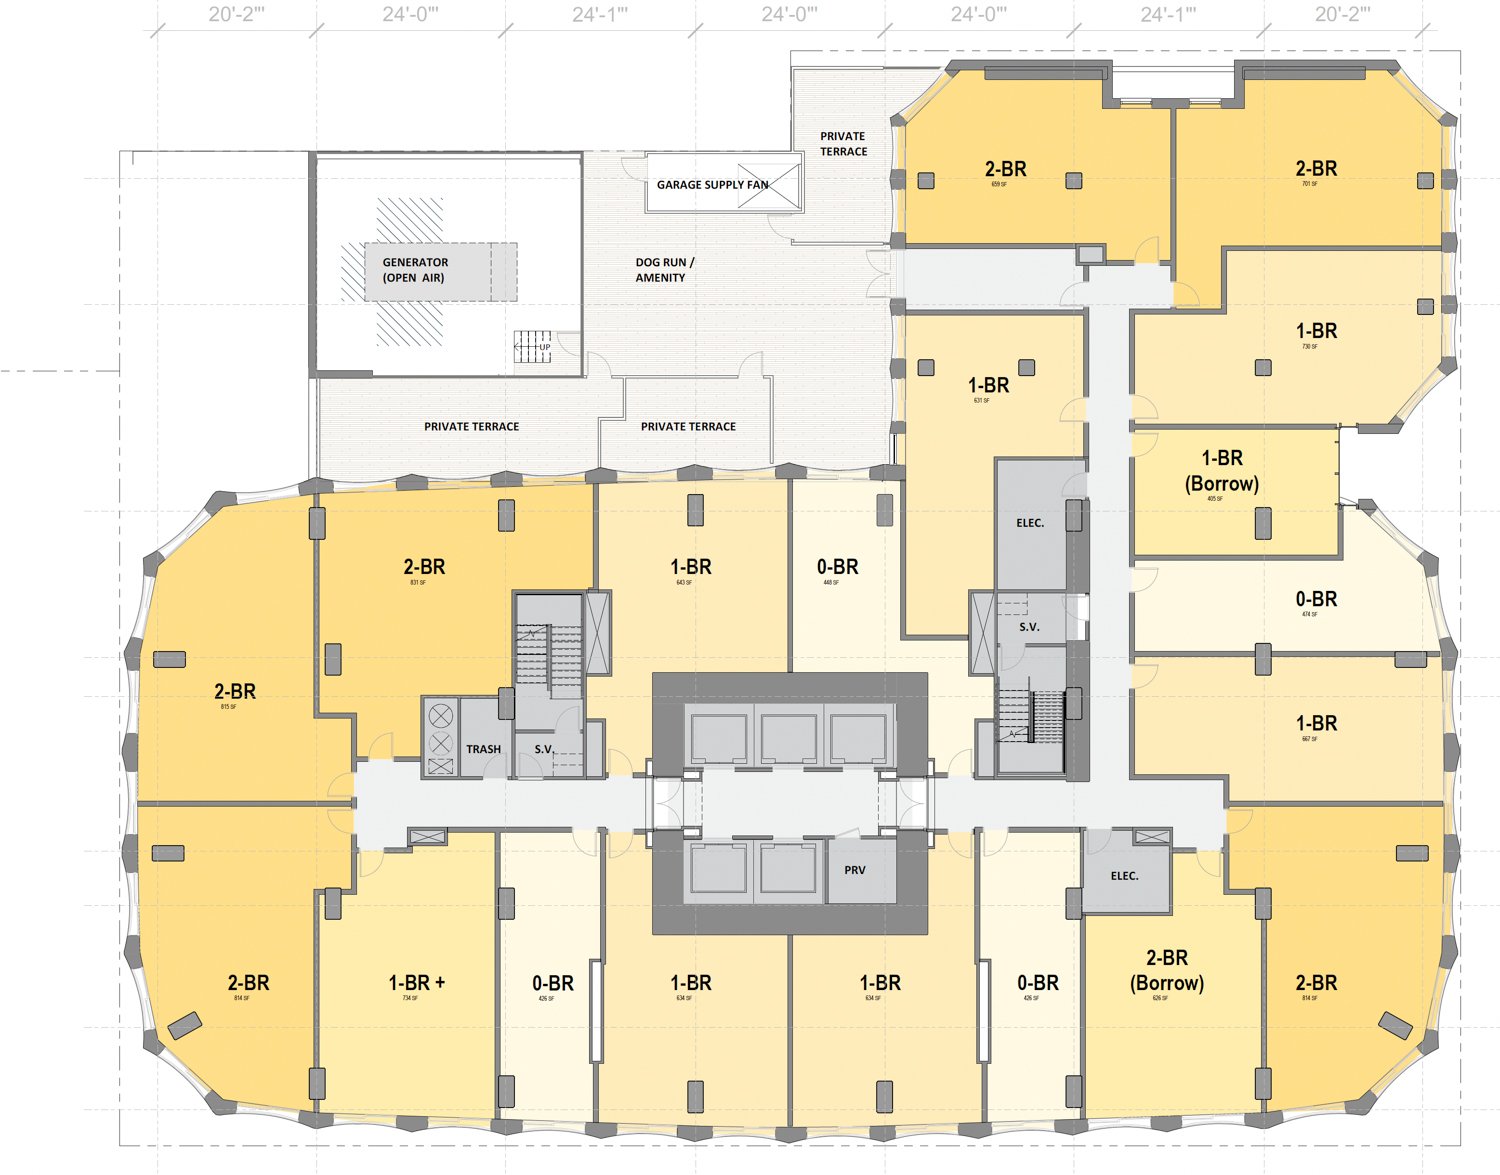 395 3rd Street residential floor plan in the podium, rendering by Henning Larsen